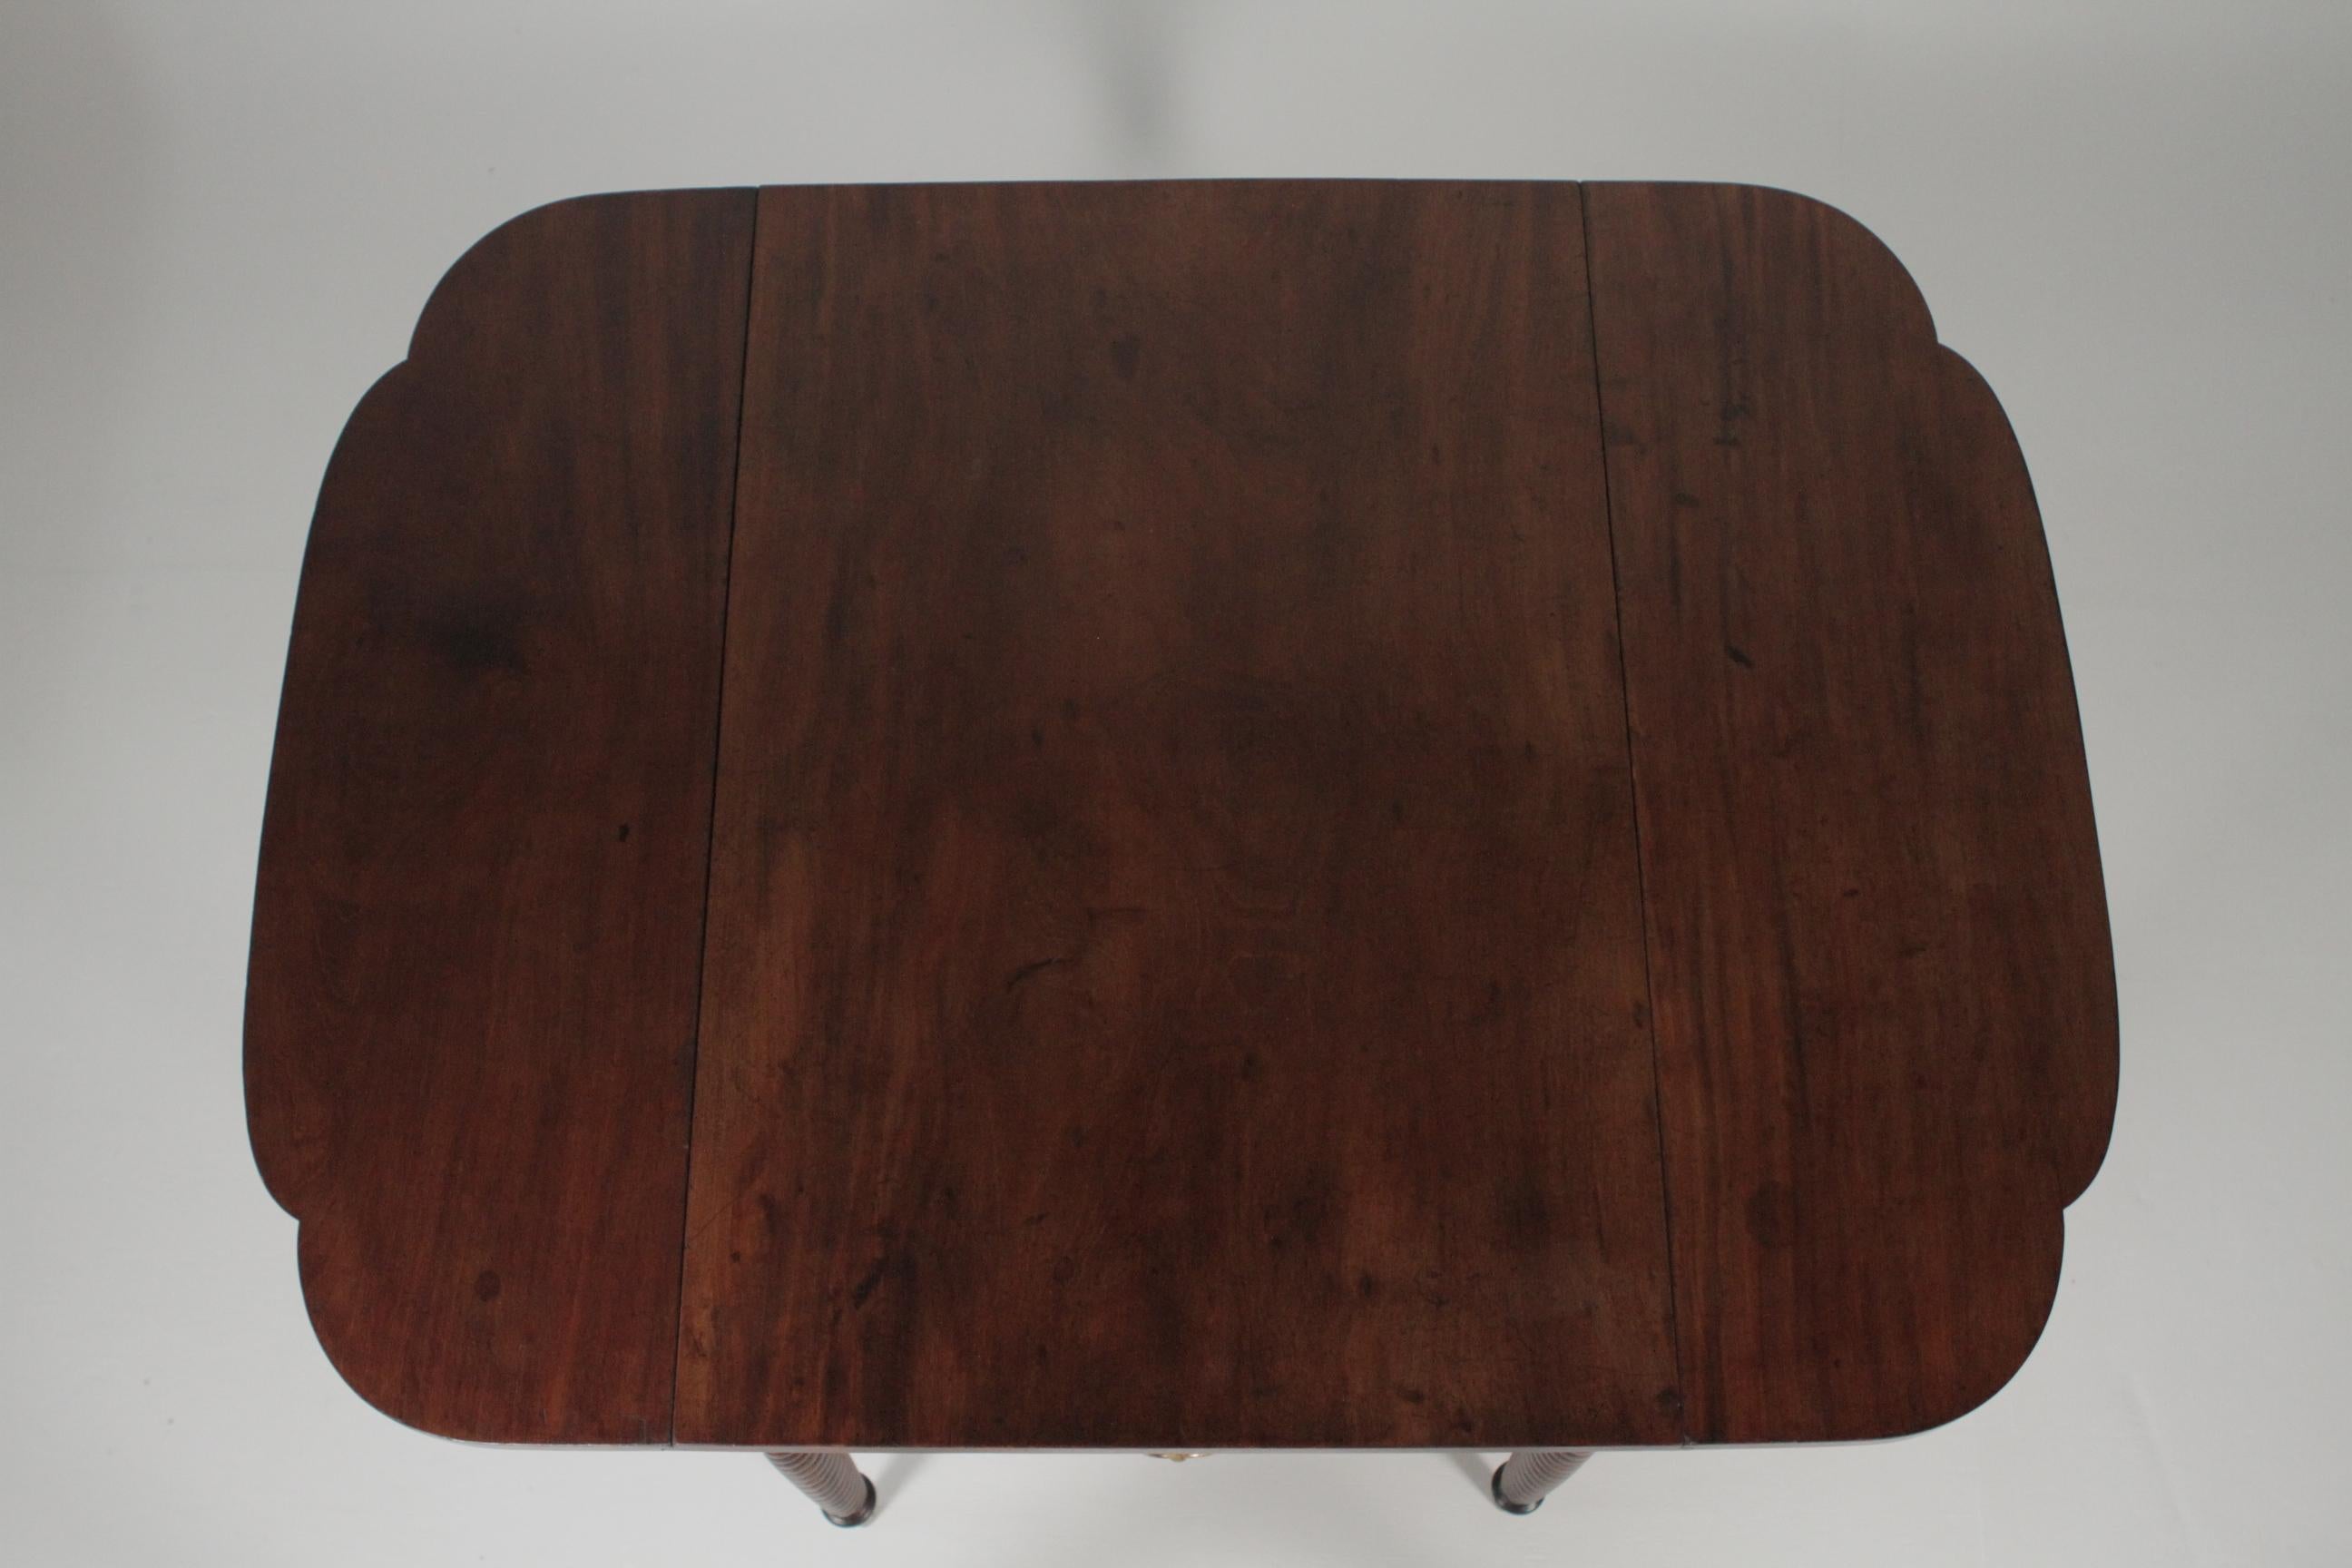 Sheraton twist leg drop-leaf one drawer table. Dimensions: 38” D x 26.5” W, circa 1820-1840.
50.5 W open x 29” H.